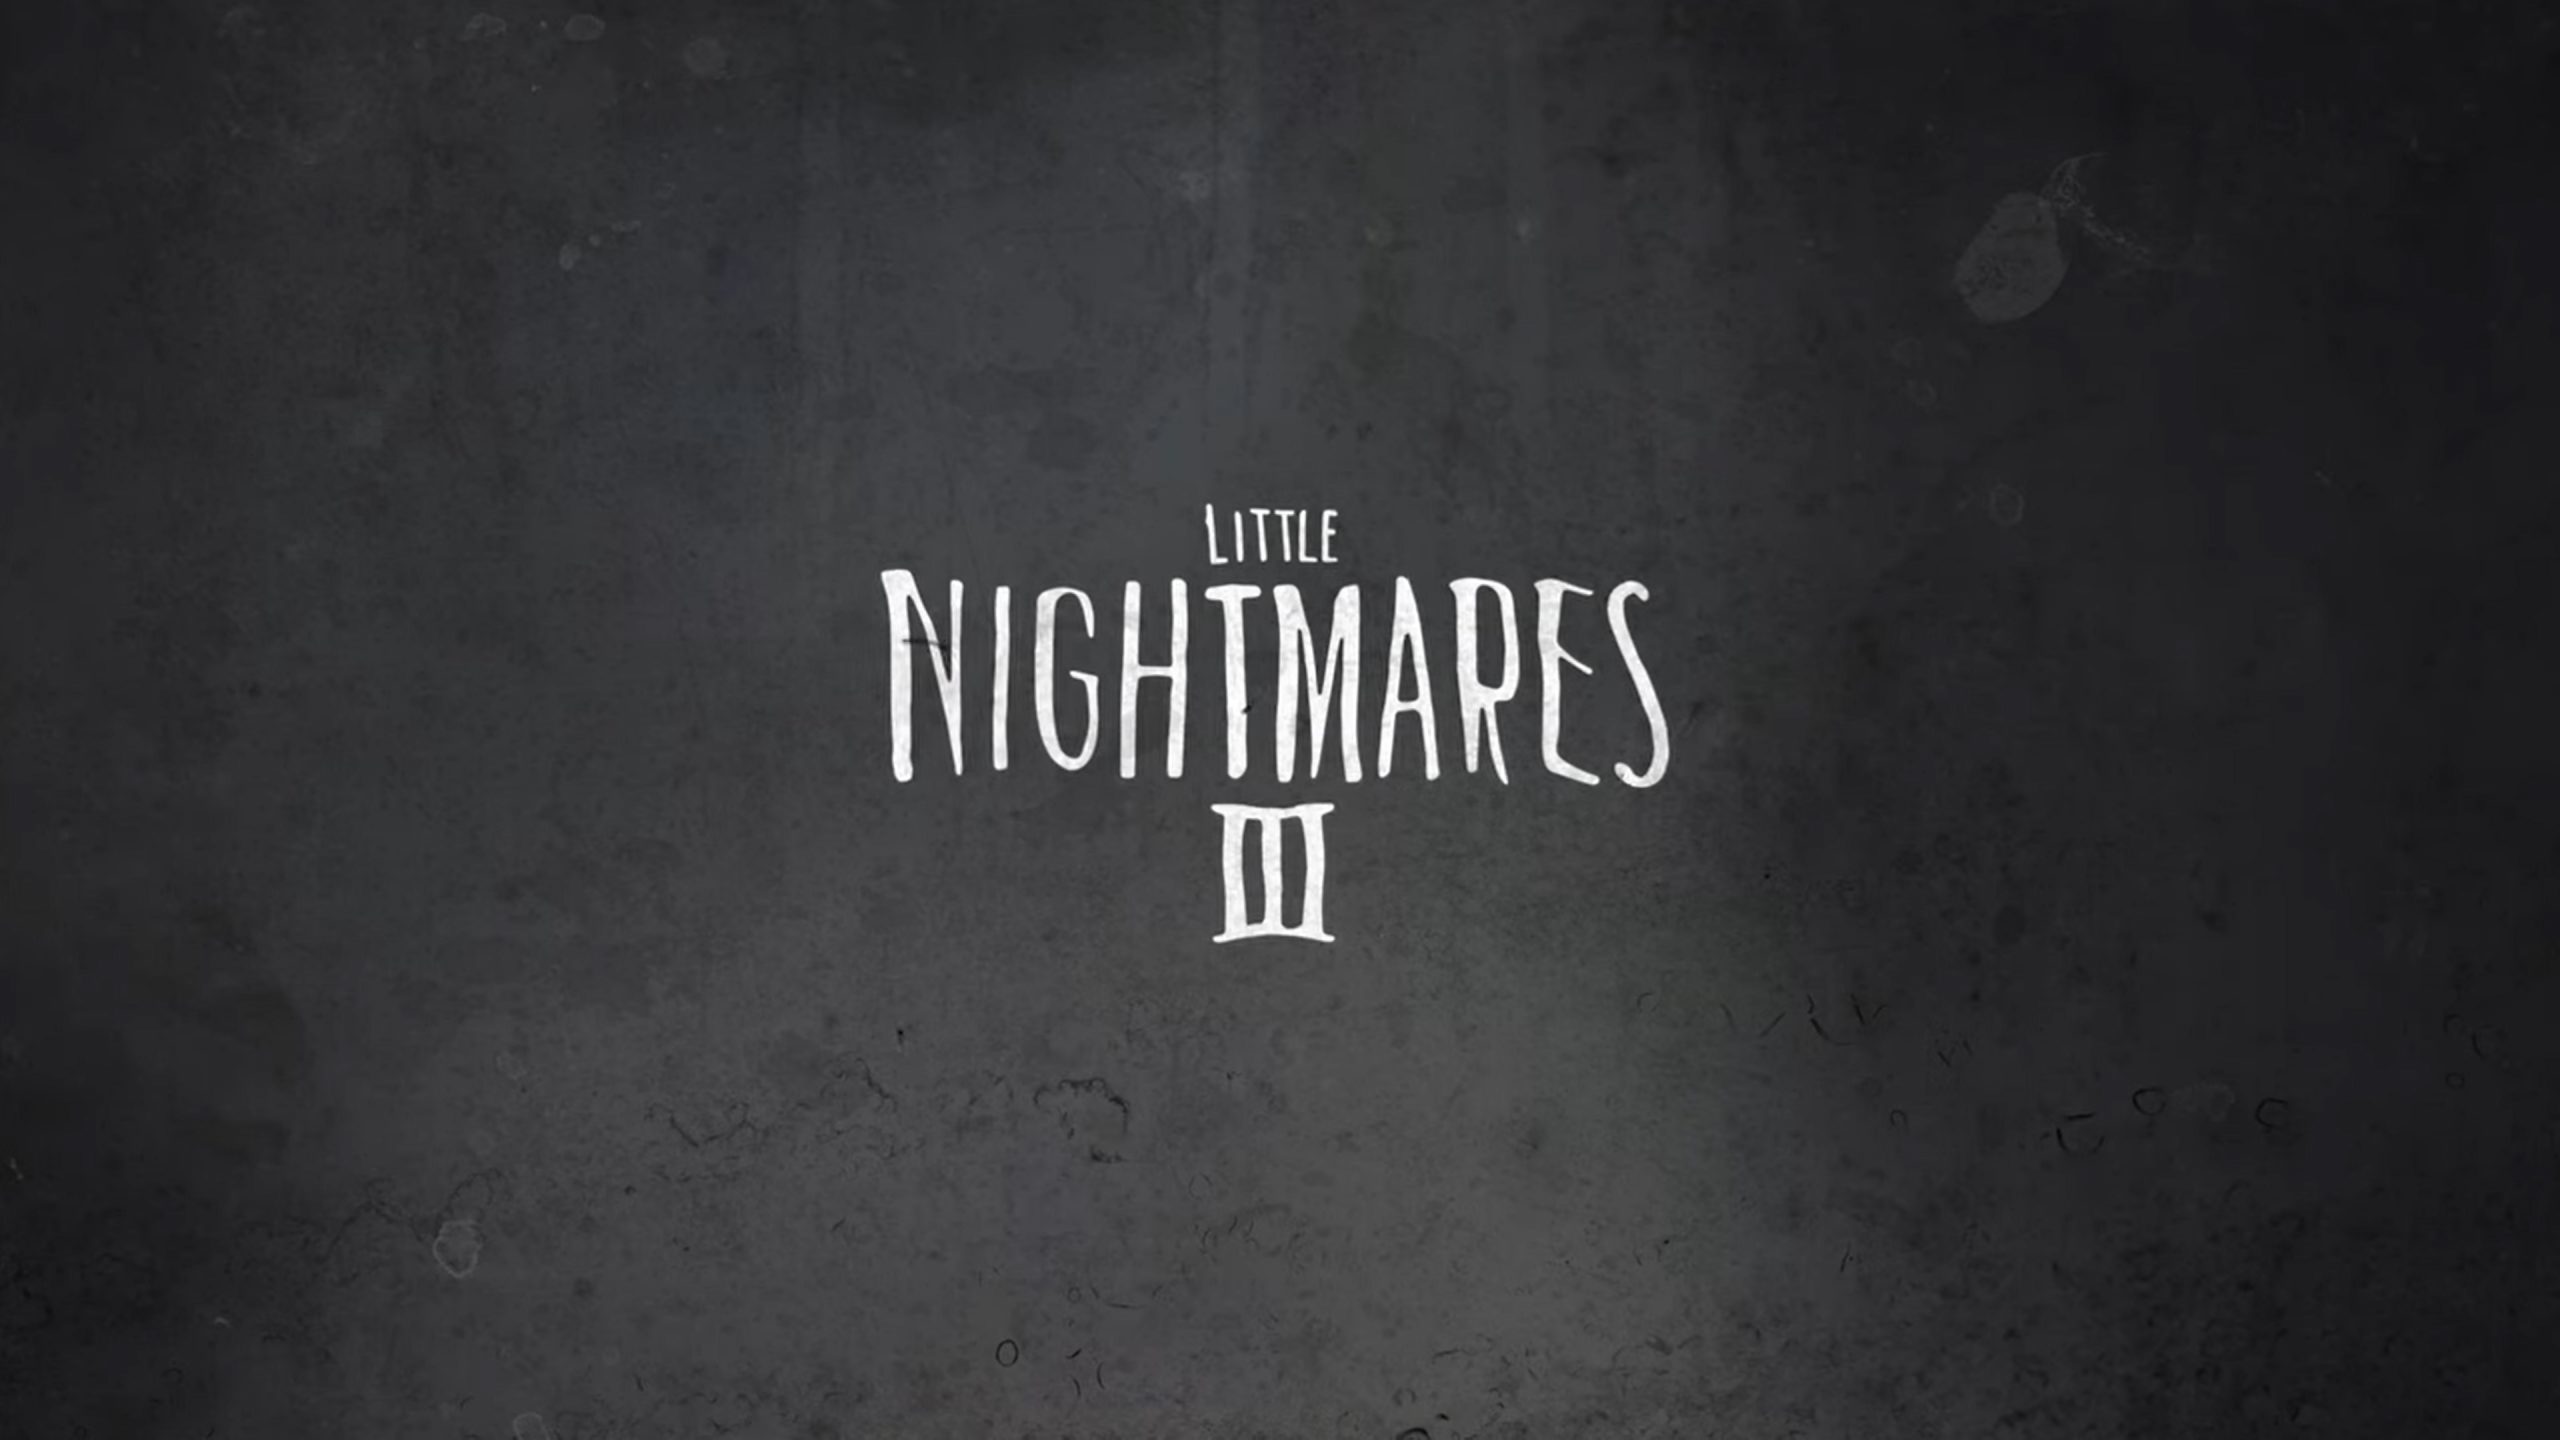 Little Nightmares 3 - Nintendo Switch